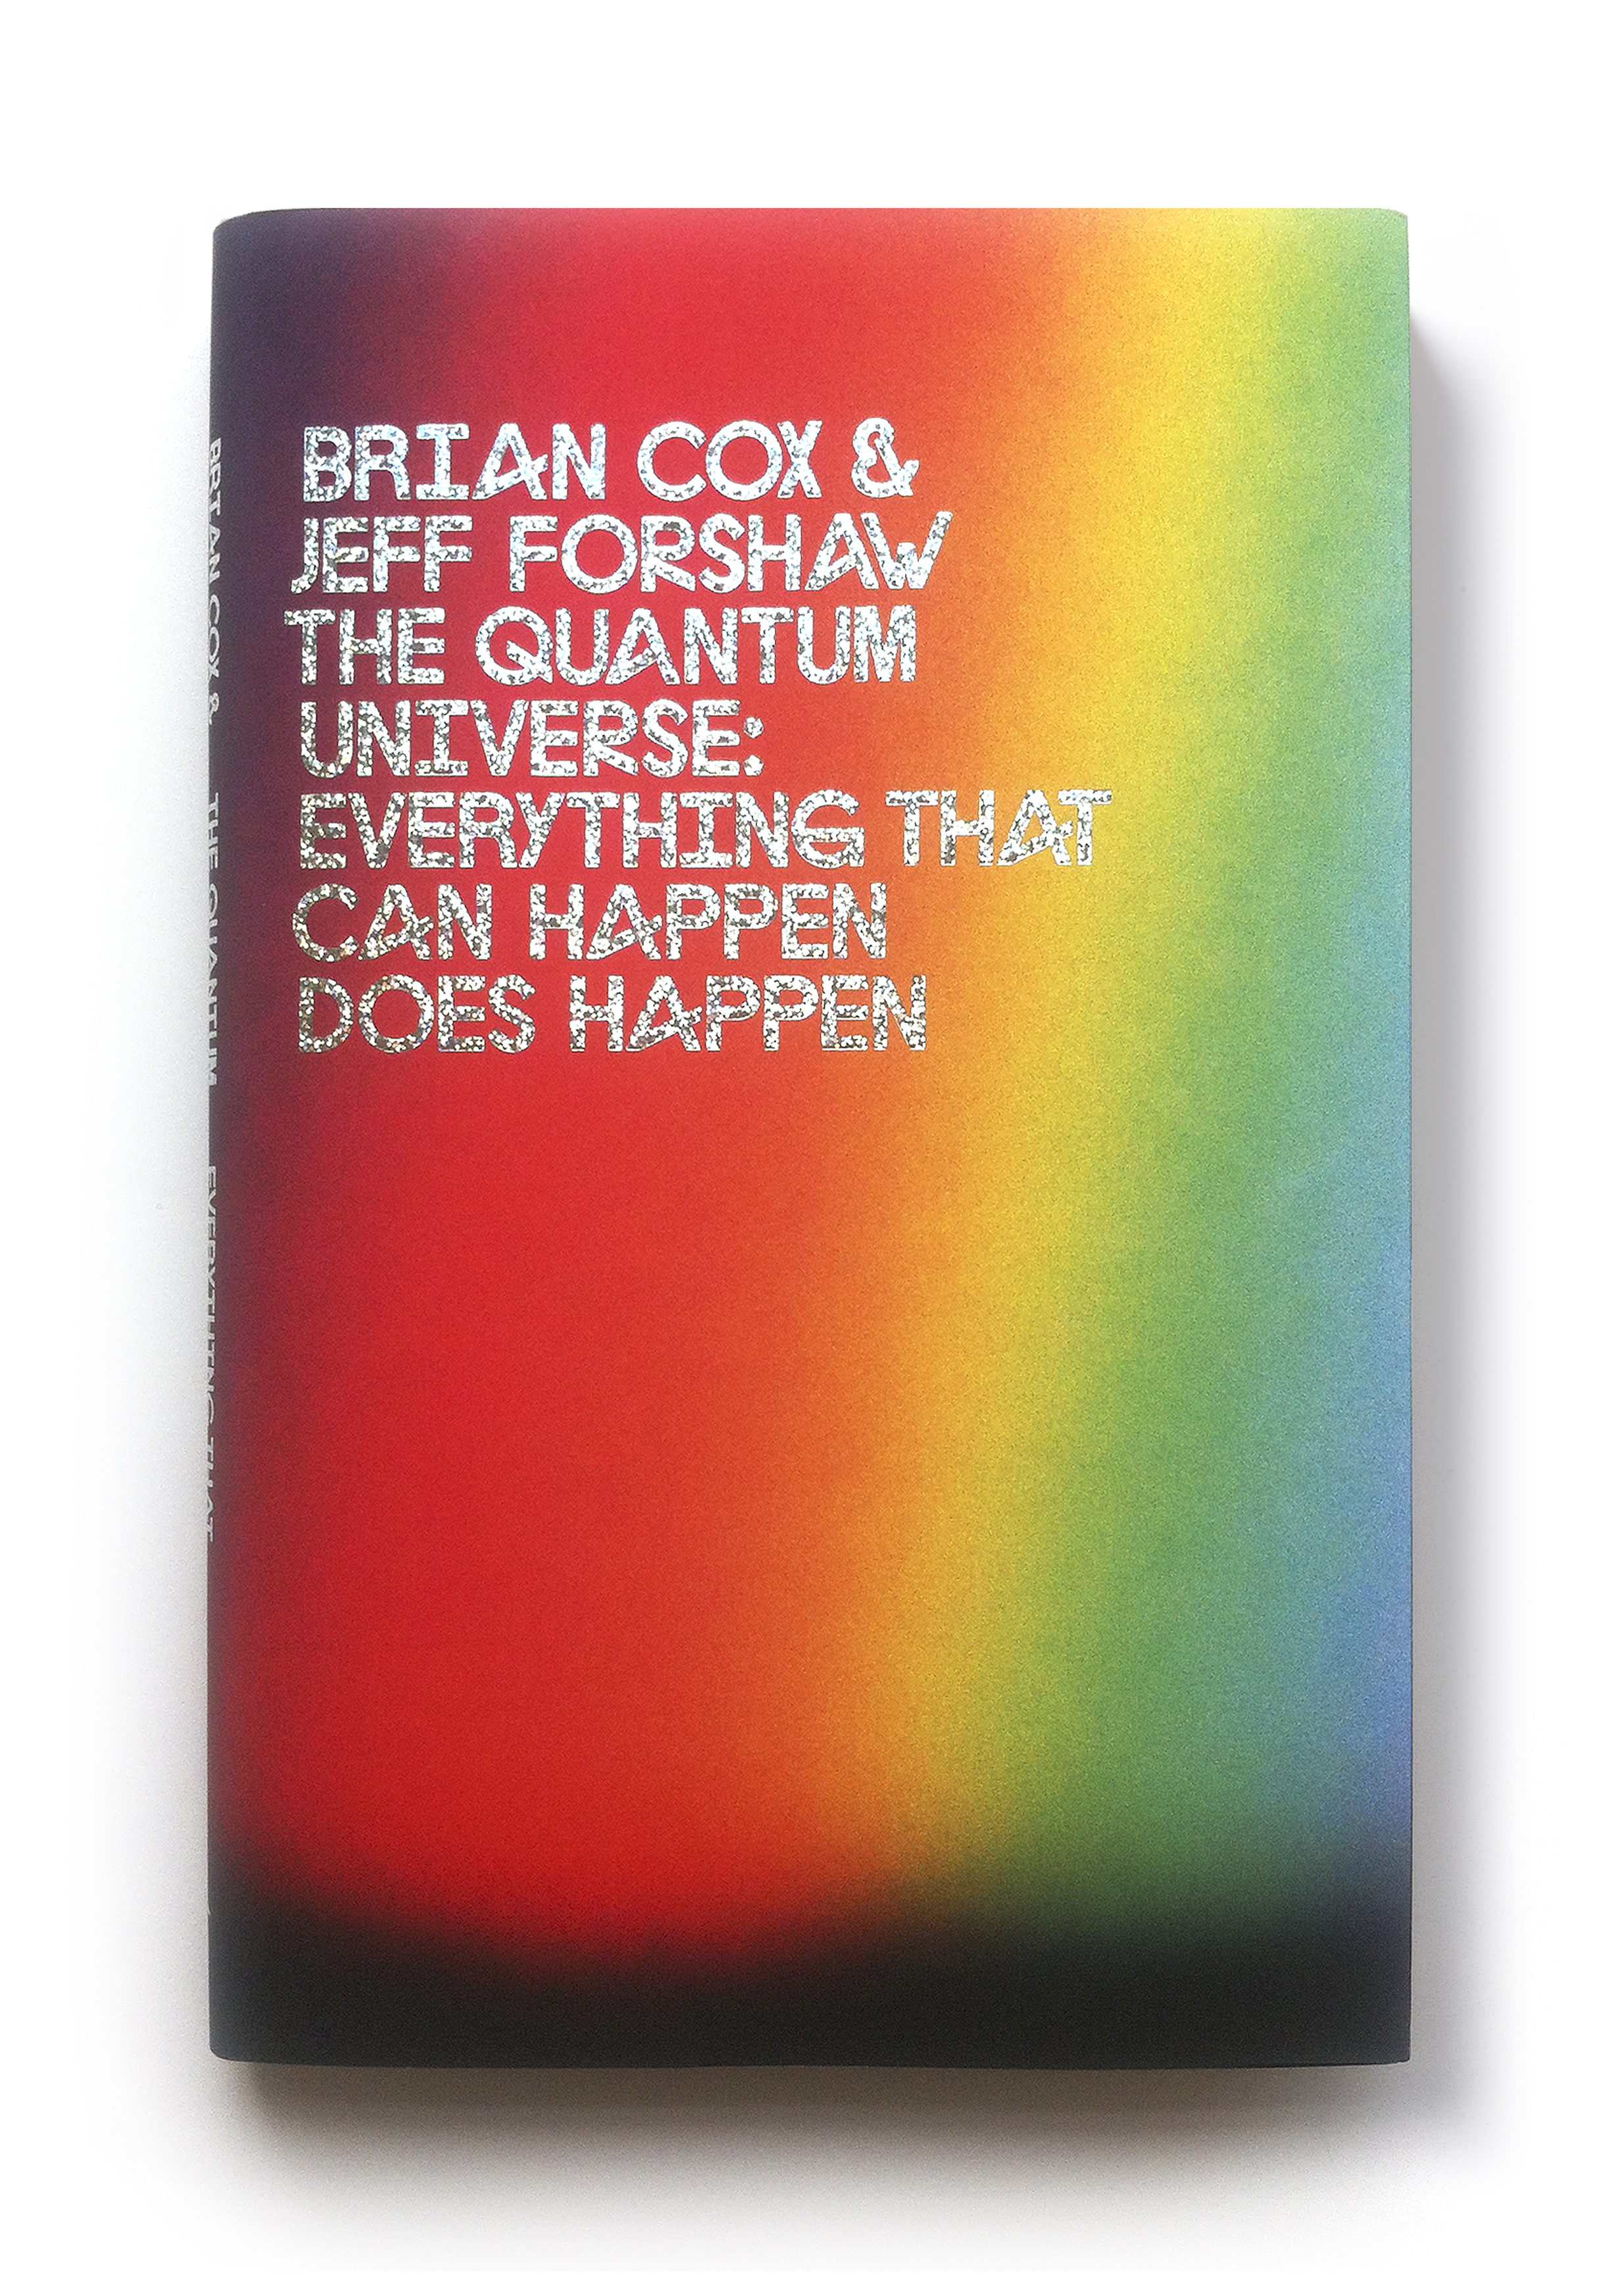      The Quantum Universe by Brian Cox &amp; Jeff Forshaw (hardback edition)&nbsp; - Art Direction: Peter Saville Design: Jim Stoddart Photograph: Tina Negas  &nbsp; 